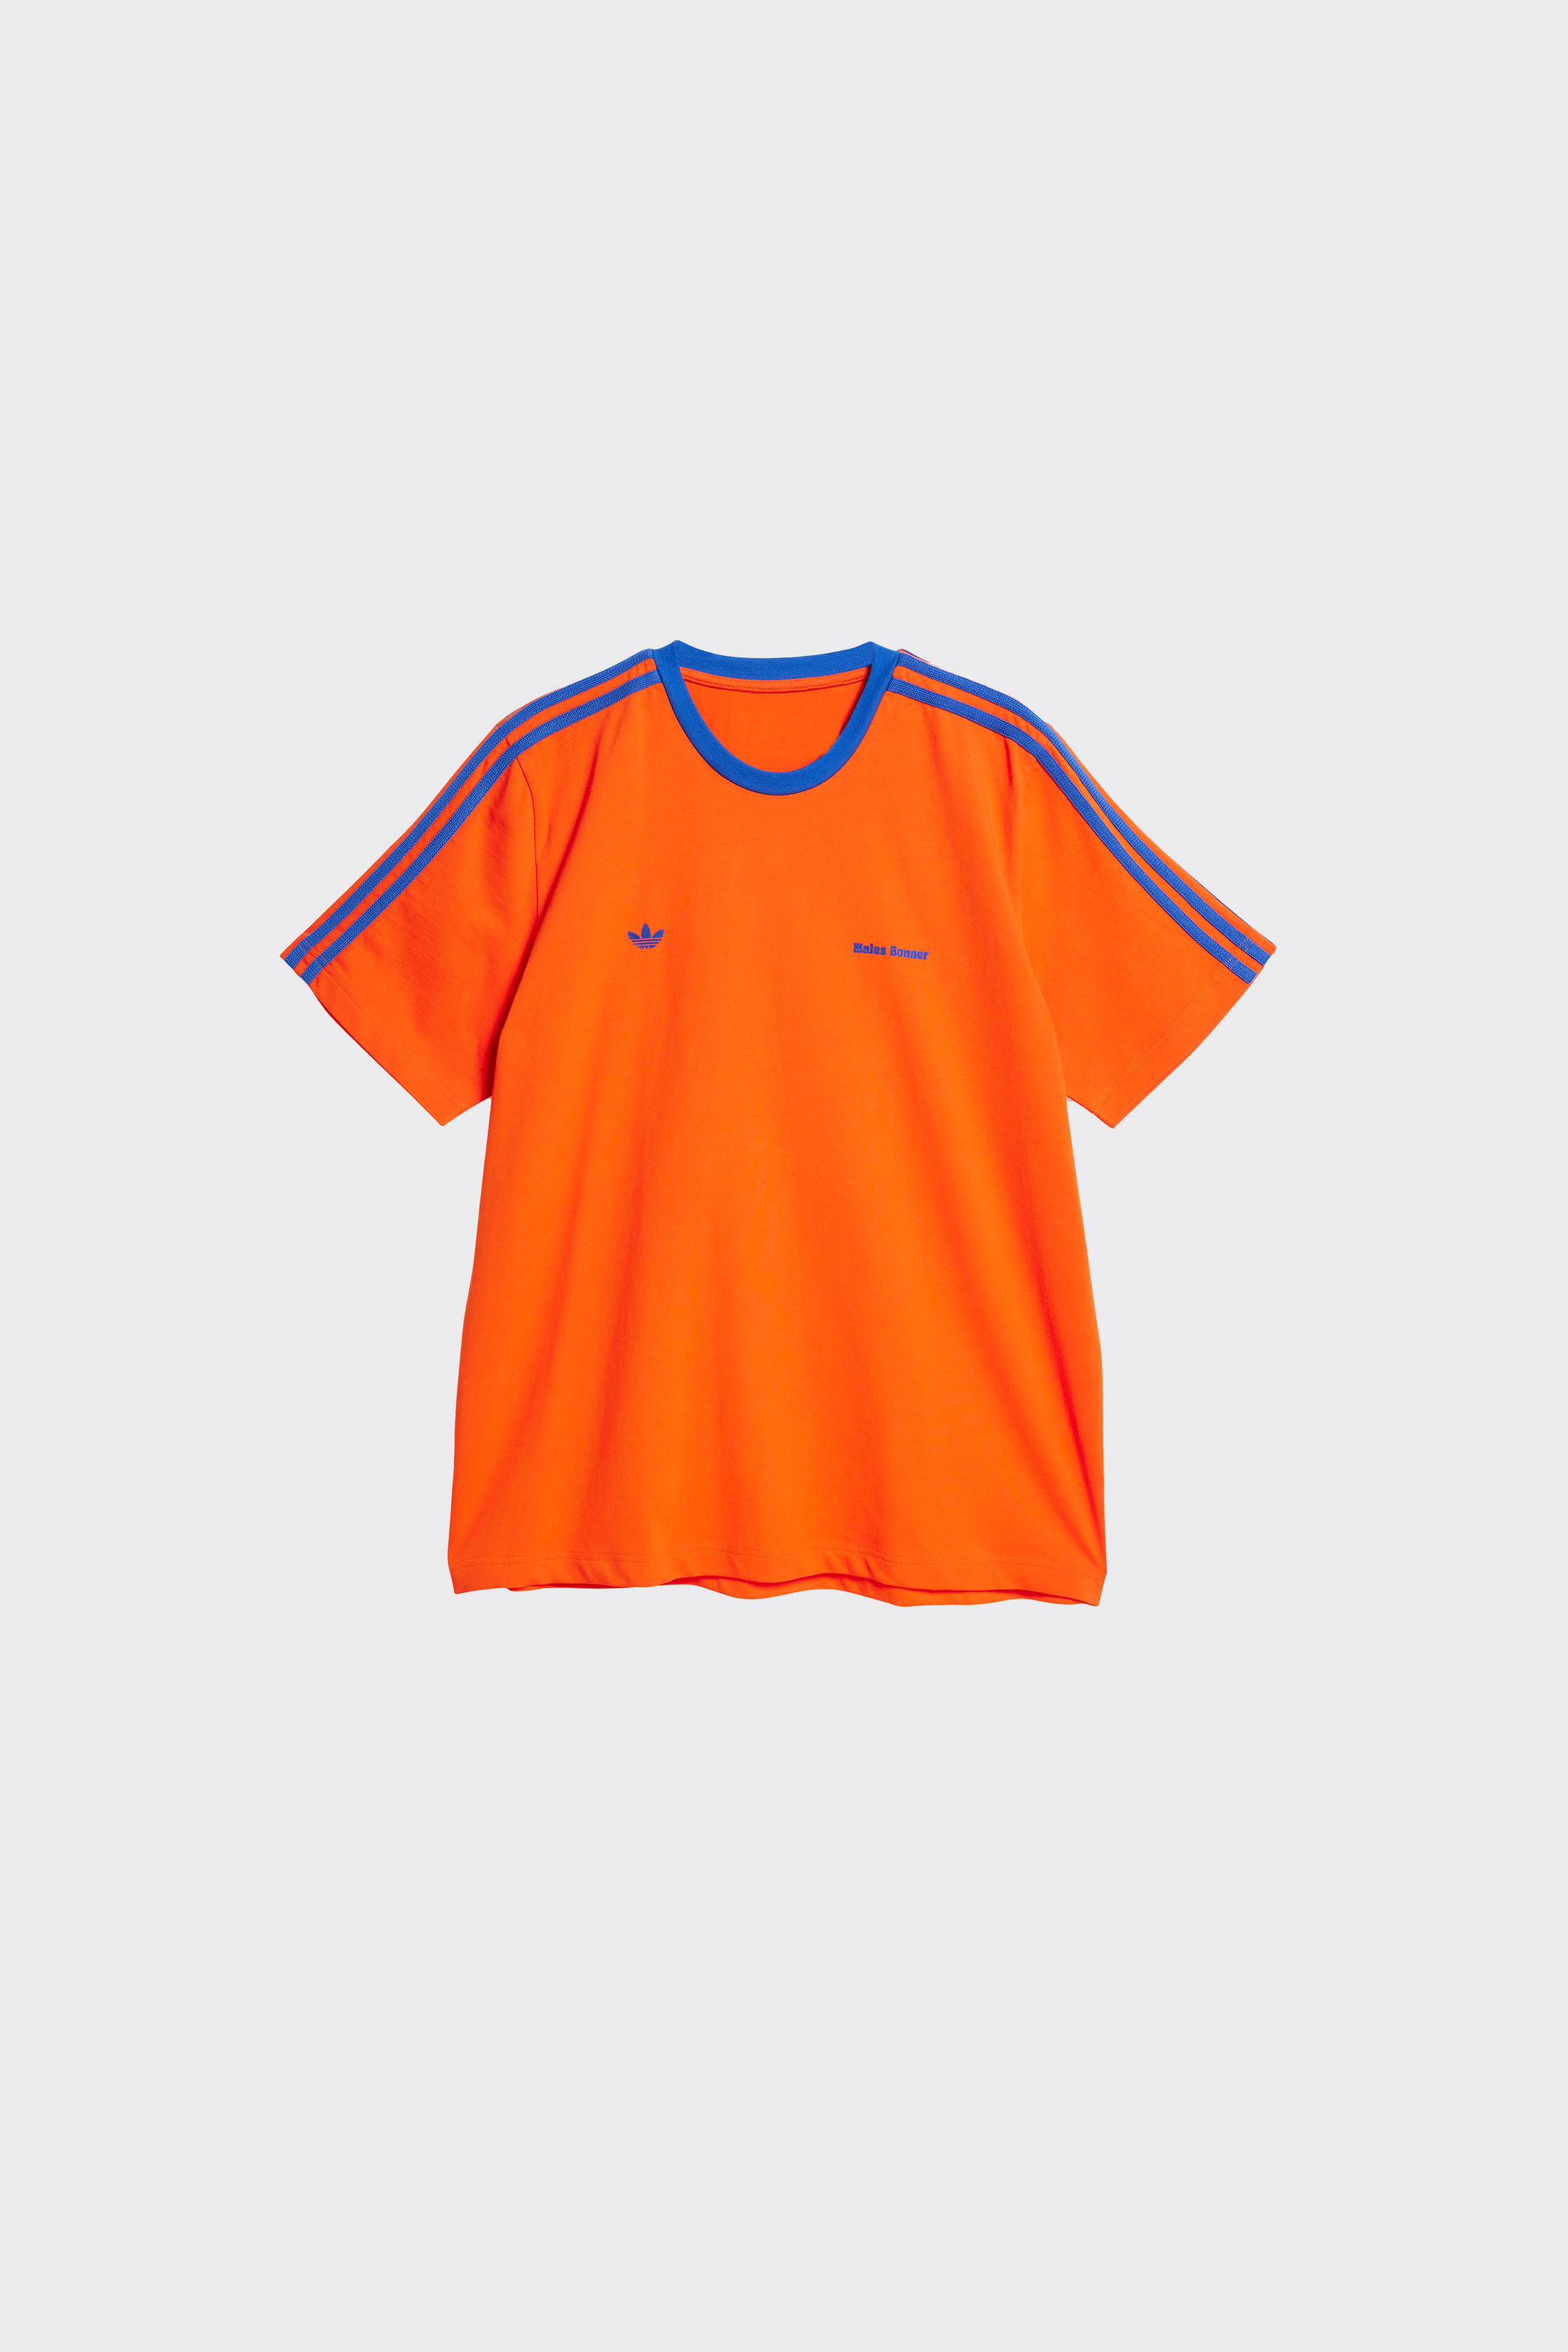 Adidas Originals by Wales Bonner T Shirt